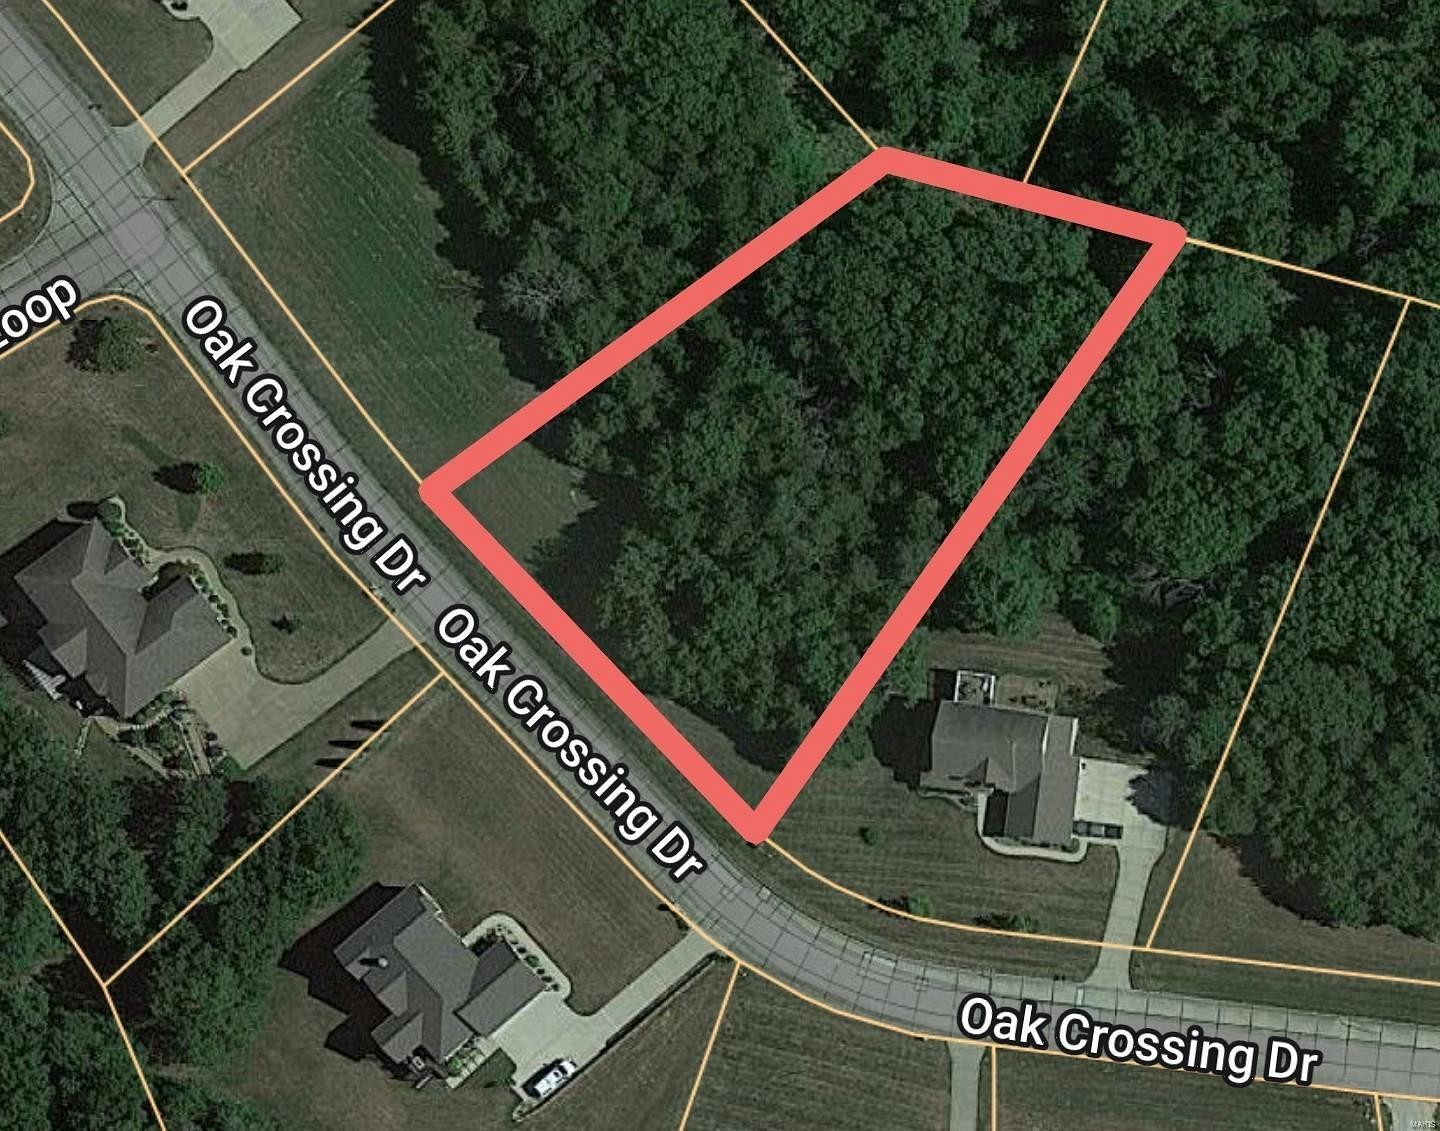 1 Acre of Residential Land for Sale in Villa Ridge, Missouri